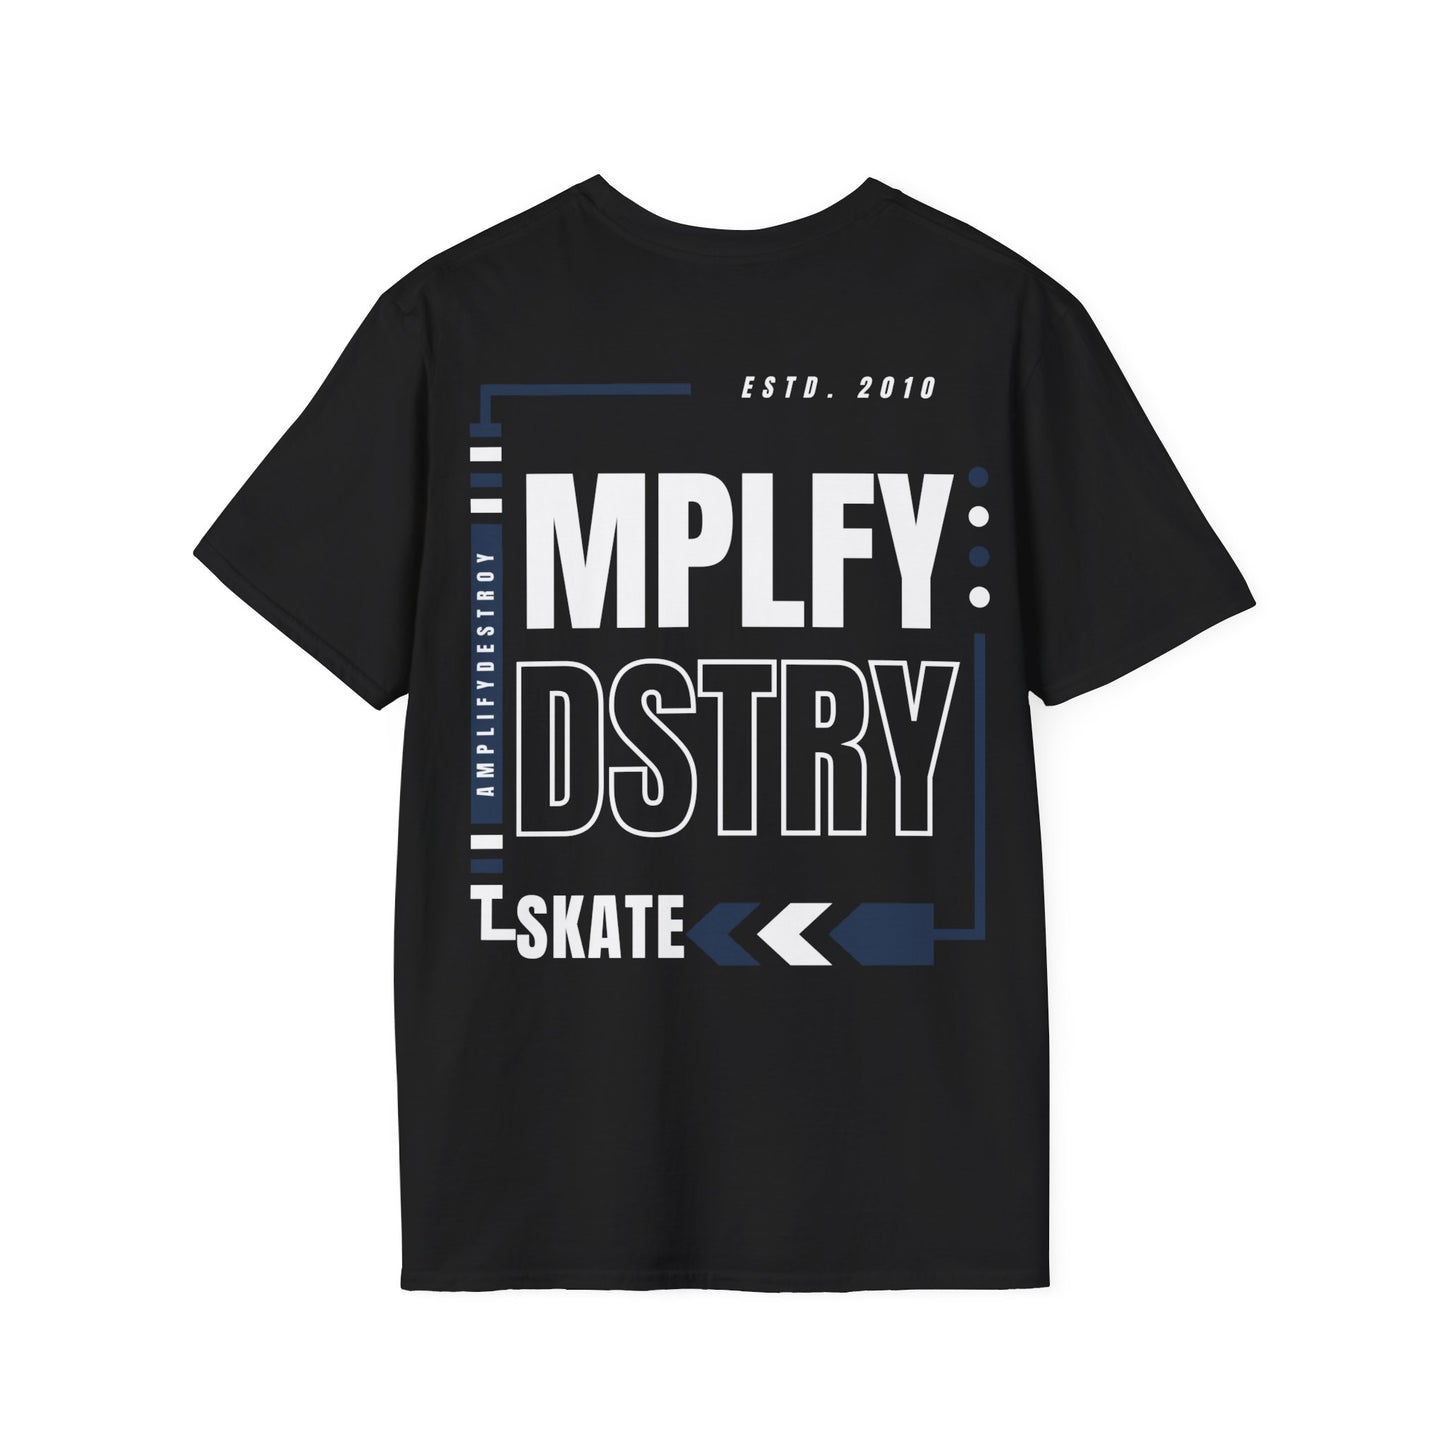 SKATE Classic Fit AmplifyDestroy Print Tee Shirt black skater